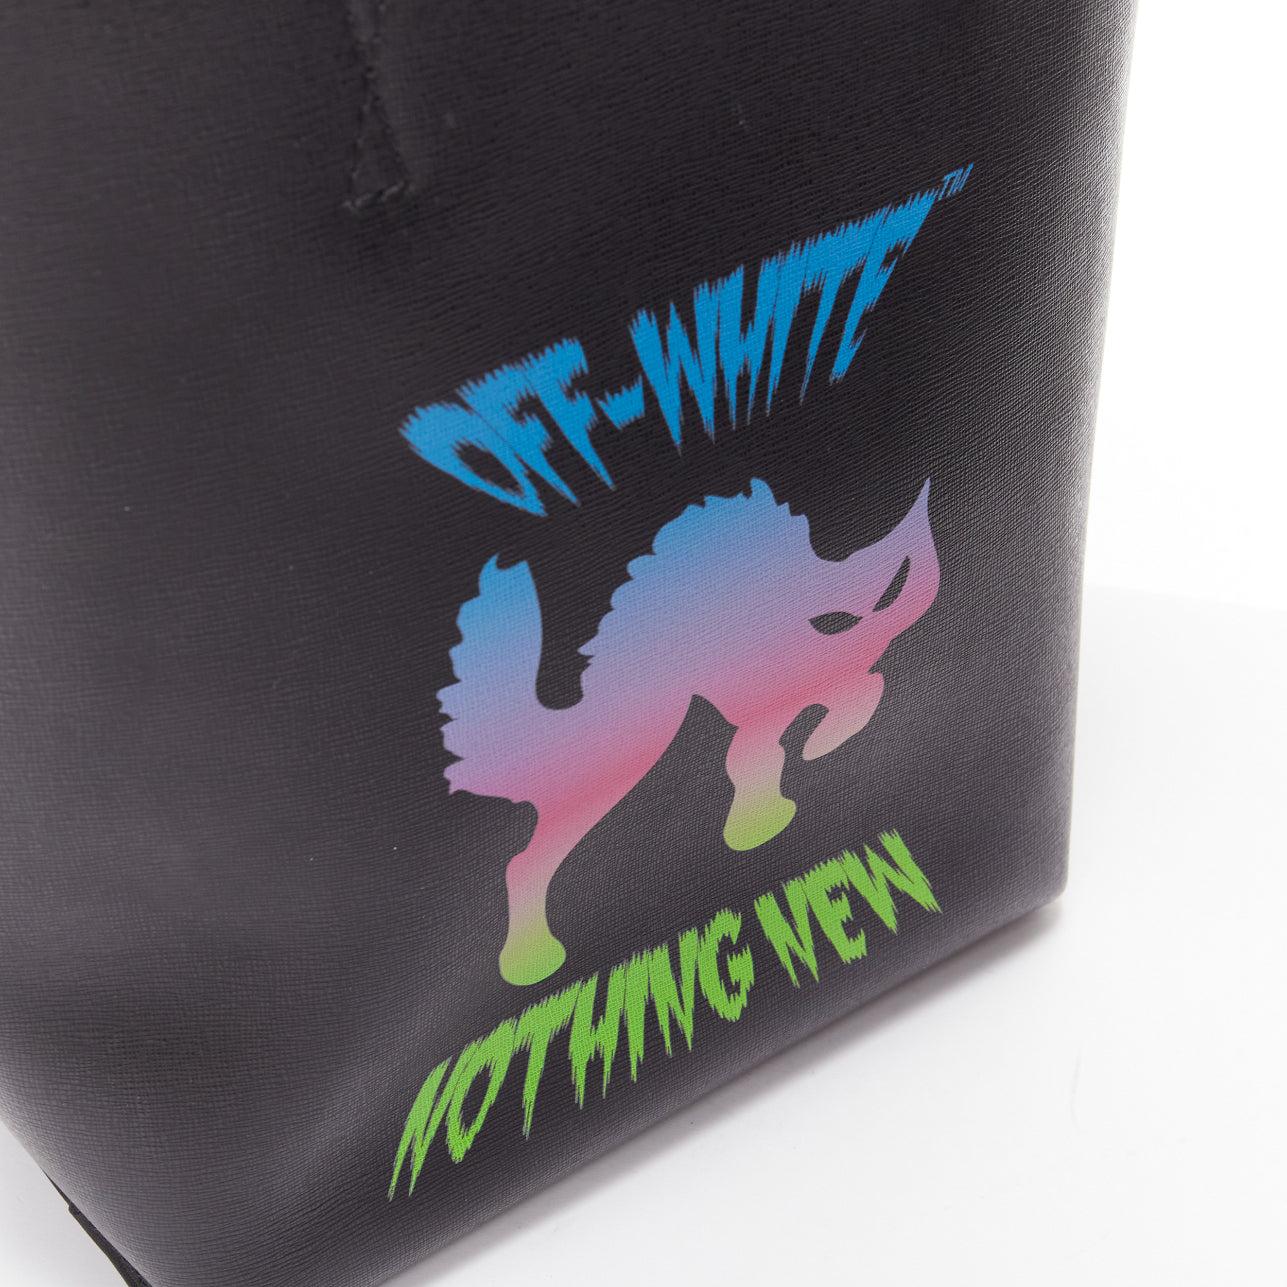 OFF Virgil Abloh Natural Habitat black leather neon cat print crossbody tote bag For Sale 3